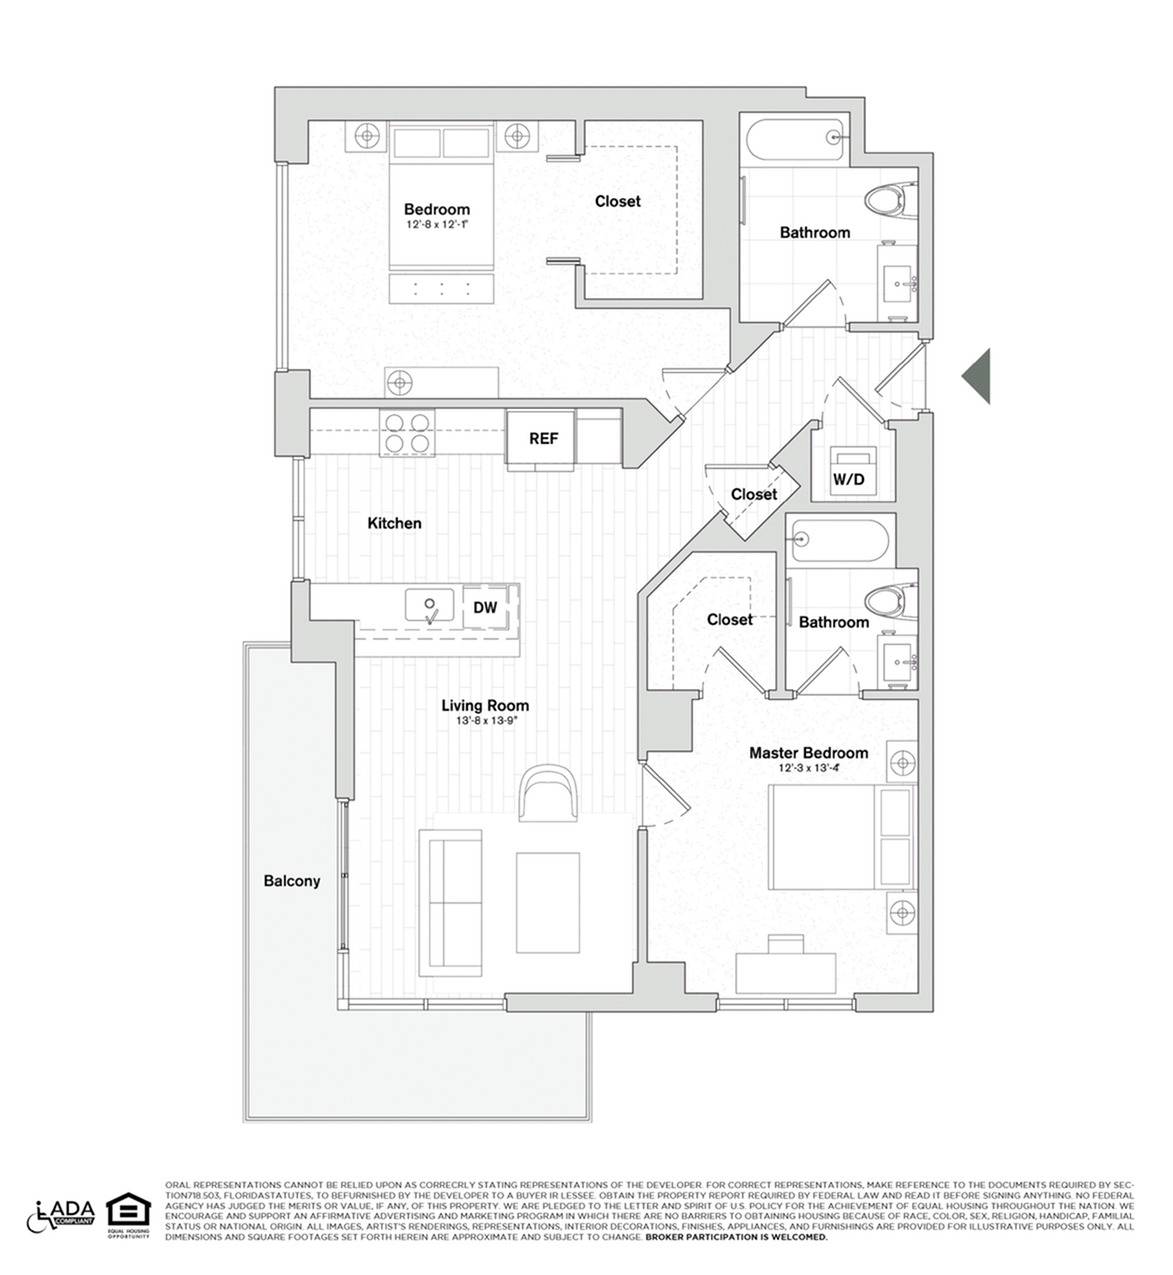 B6 Floor Plan Image